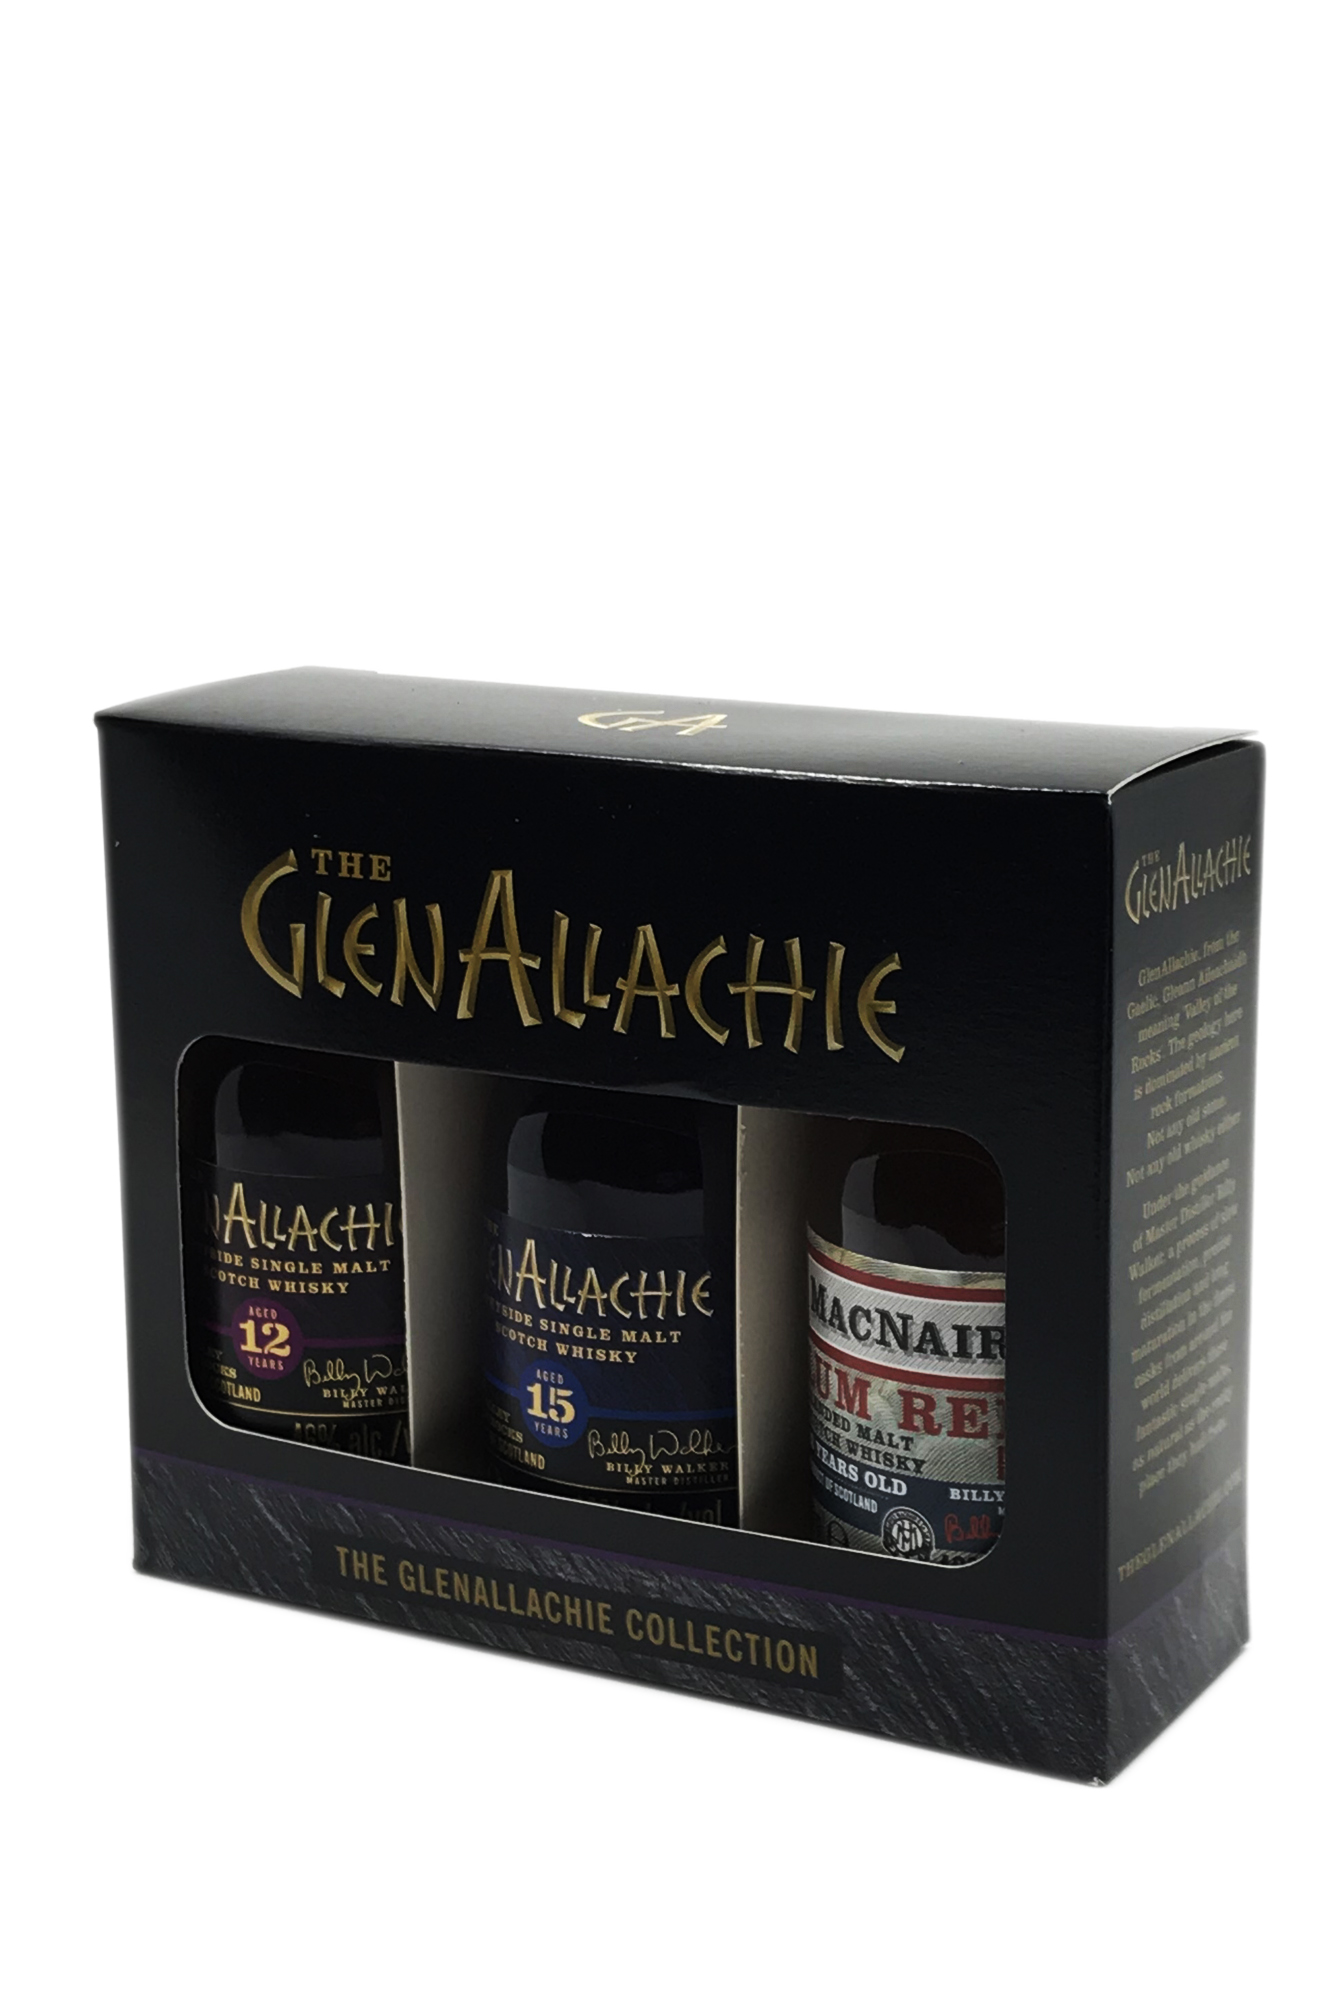 The GlenAllachie Collection - Miniaturen (3 x 0,05l) - 46% vol. Alc. - Scotch Wisky